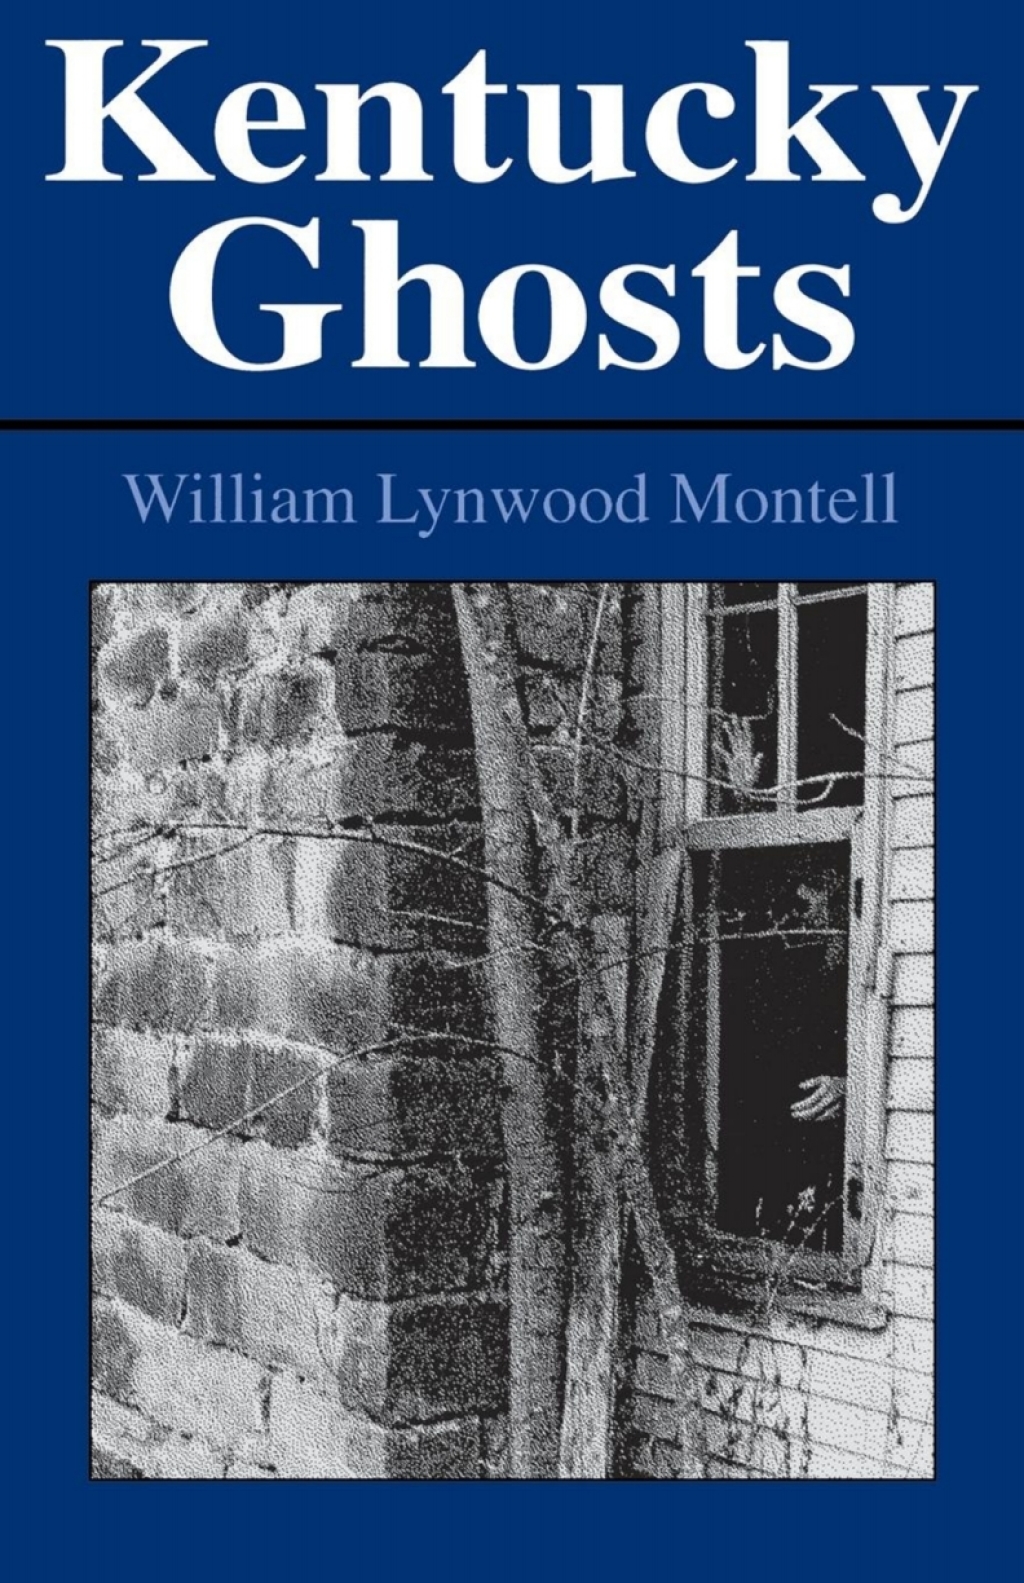 Kentucky Ghosts (eBook) - William Lynwood Montell